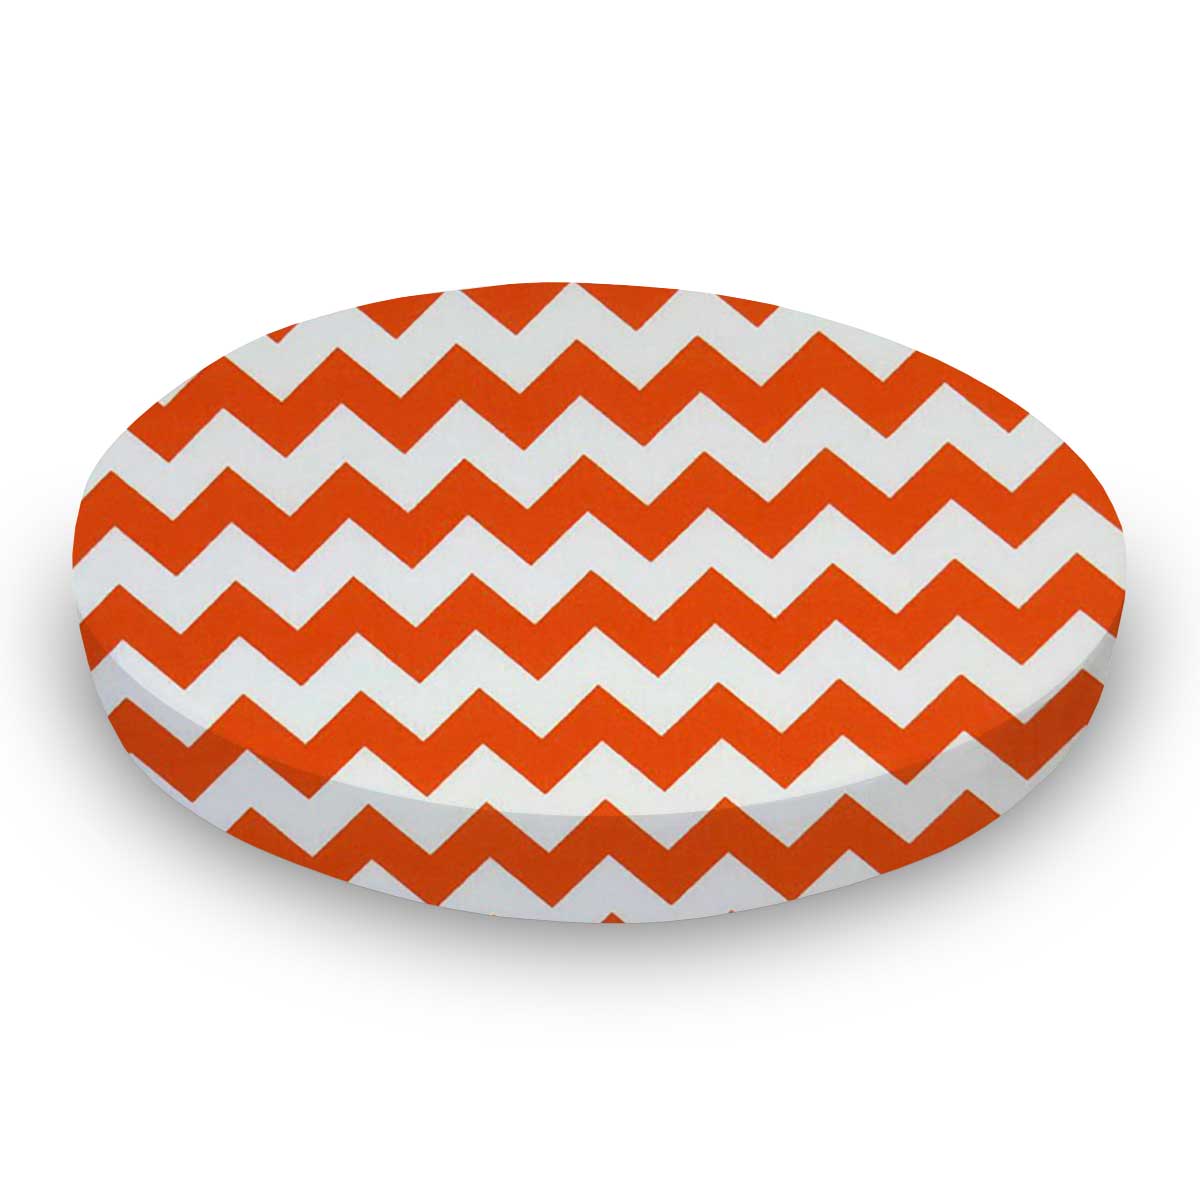 Oval Crib (Stokke Sleepi) - Orange Chevron Zigzag - Fitted  Oval